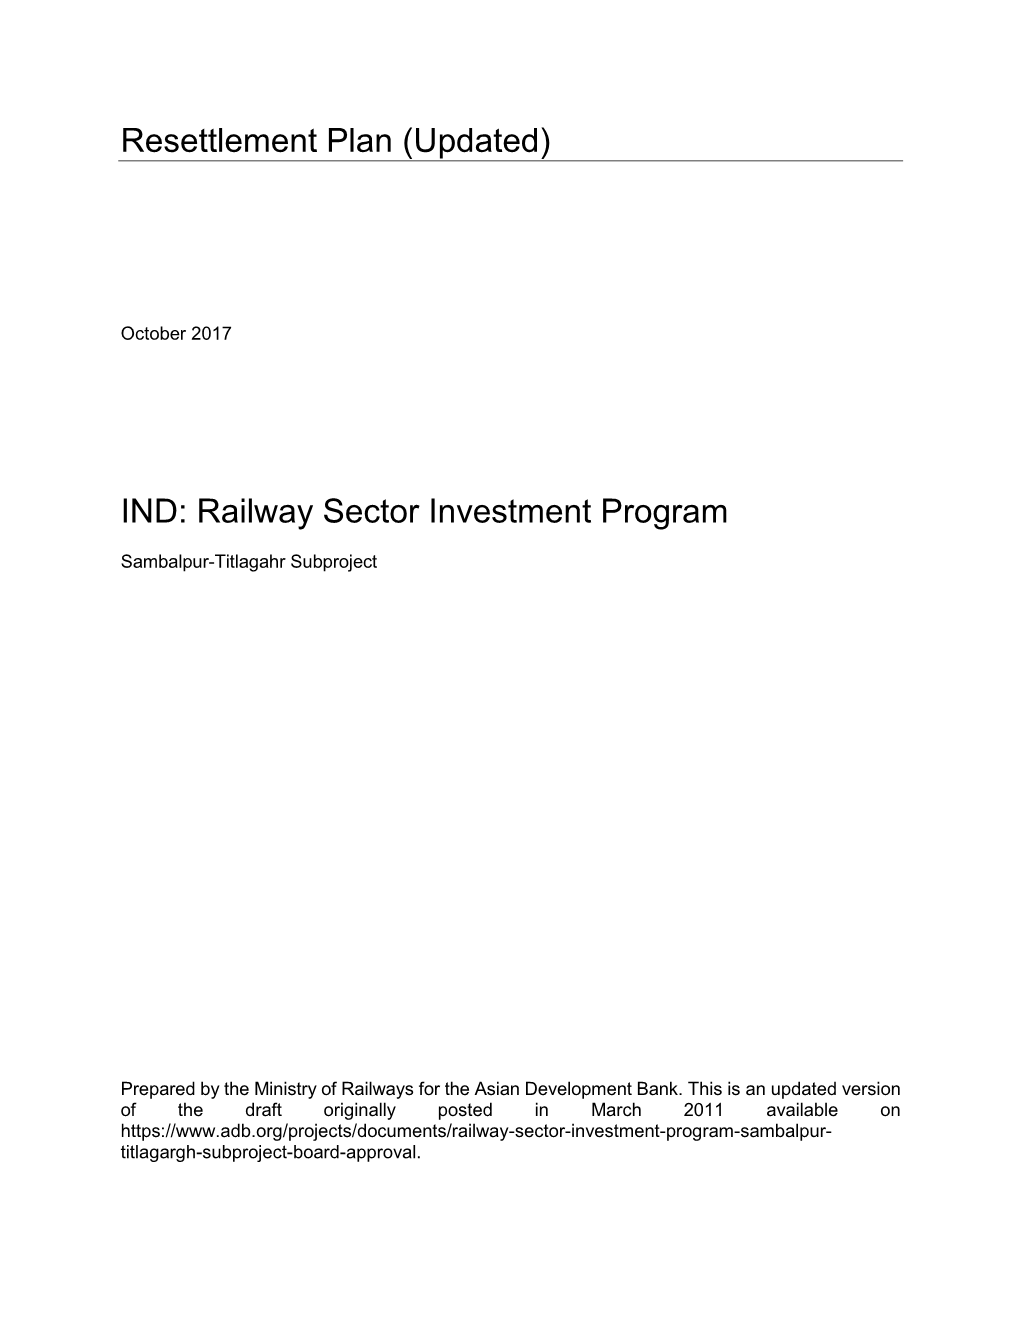 Sambalpur-Titlagargh Subproject, Railway Sector Investment Program